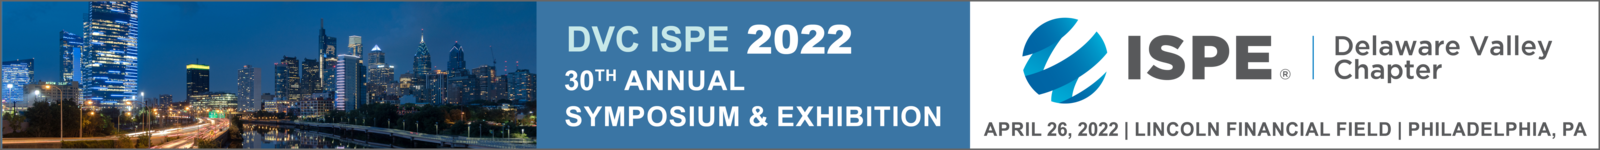 ISPE DVC: 30th Annual Symposium & Exhibition logo